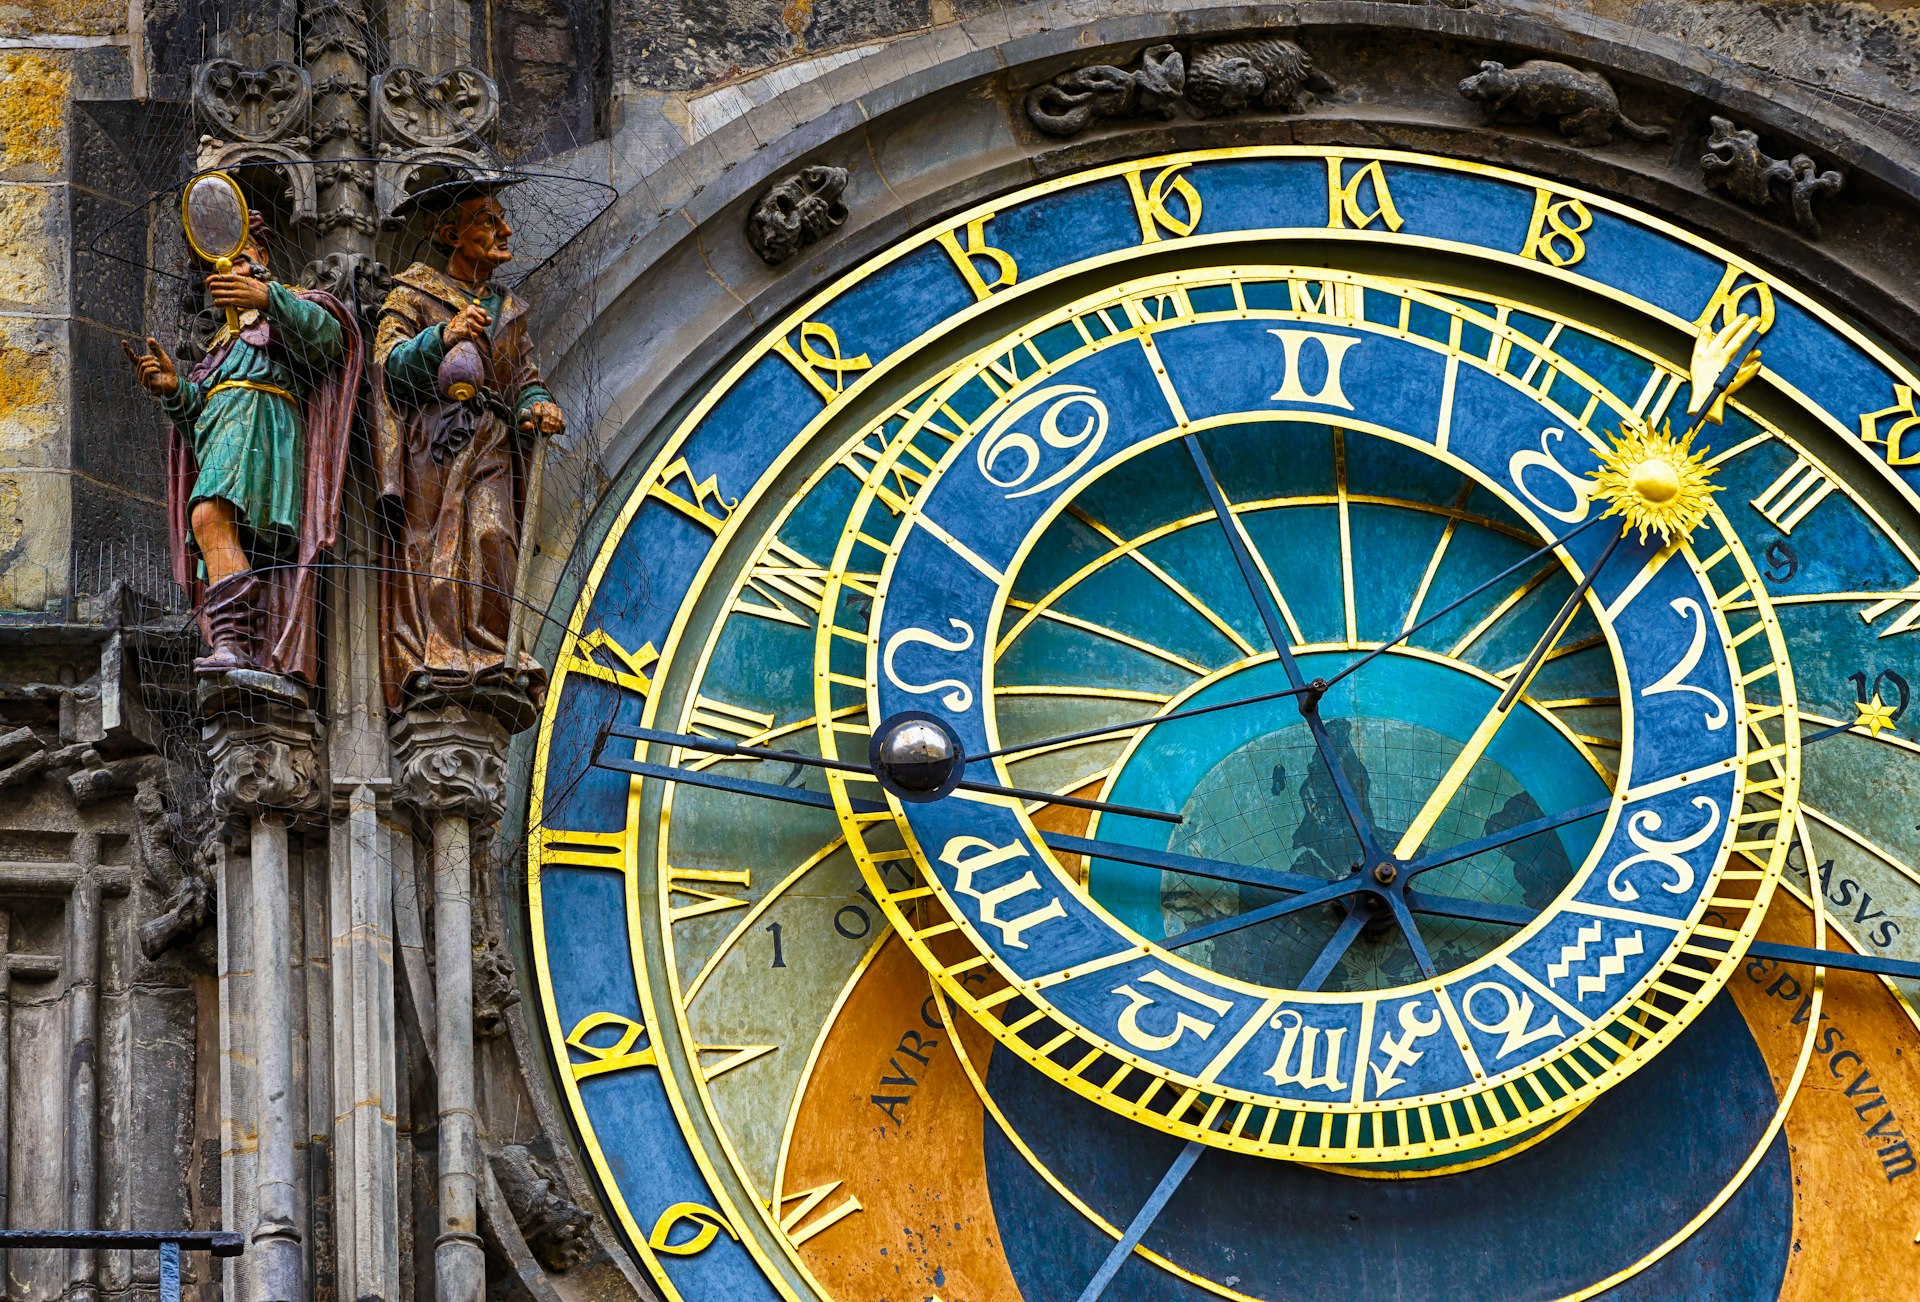 Astronomical Clock Prague Orloj in the Old Square of Prague, Czech Republic. Architecture and landmark of Prague